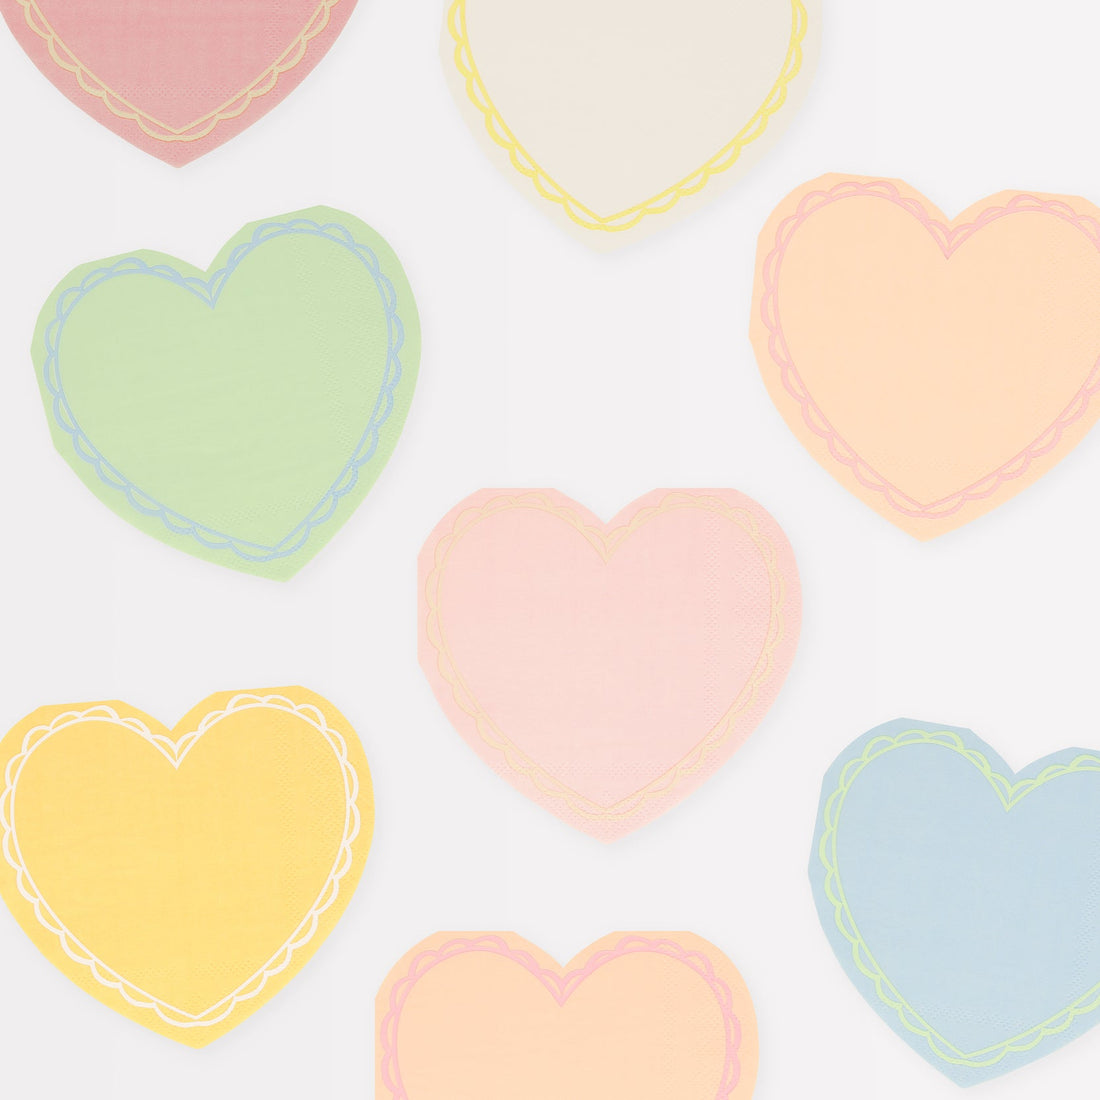 A group of Meri Meri pastel heart napkins.